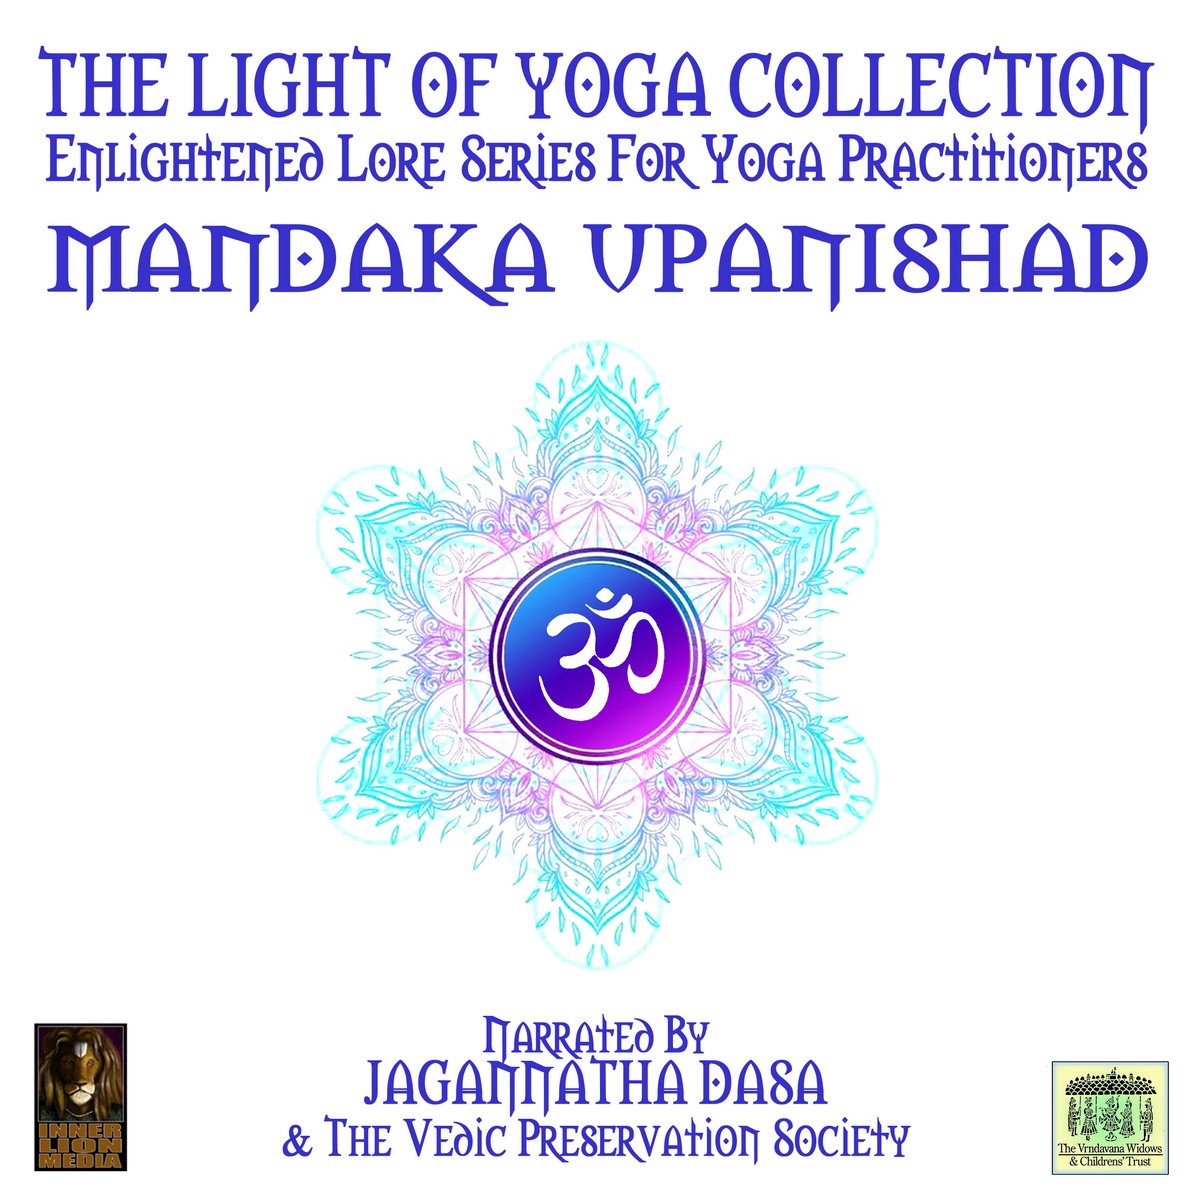 The Light Of Yoga Collection – Mandaka Upanishad